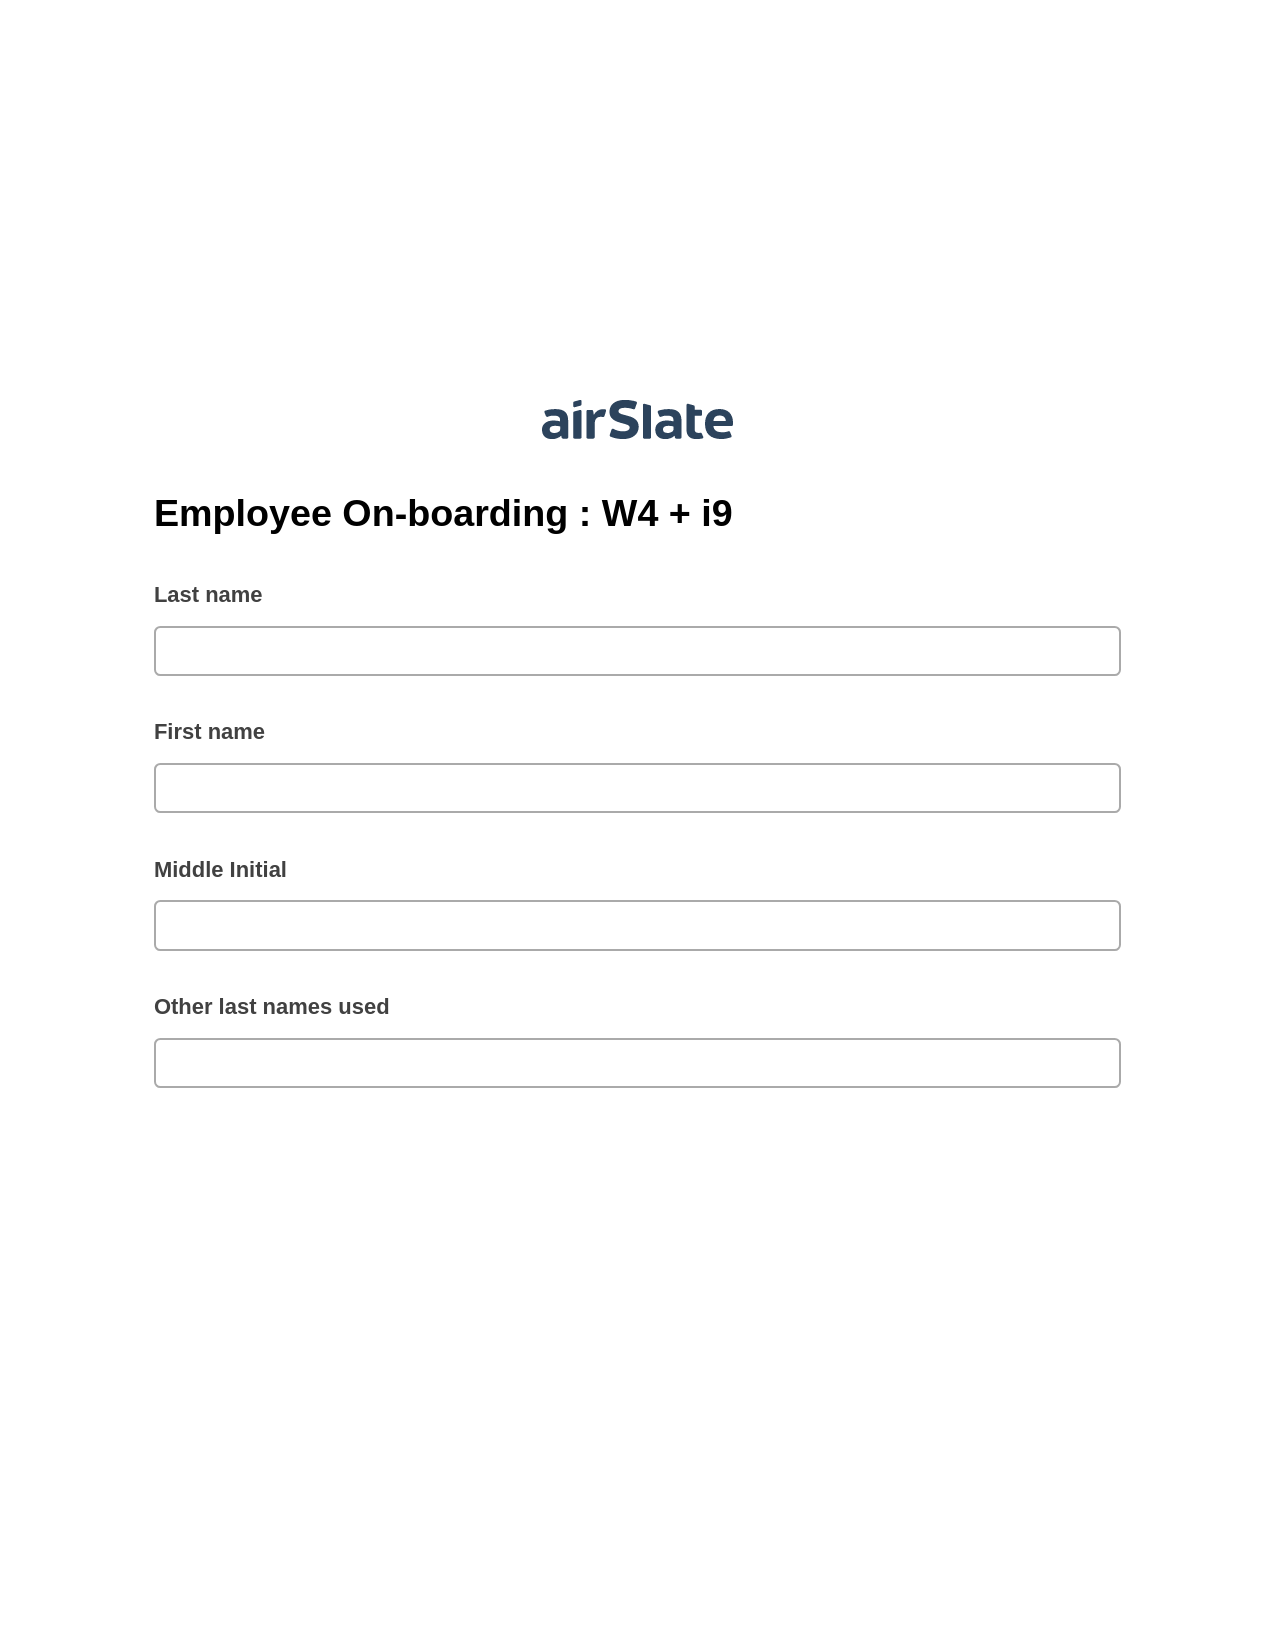 Multirole Employee On-boarding : W4 + i9 Pre-fill from Salesforce Records via SOQL Bot, Reminder Bot, Webhook Postfinish Bot